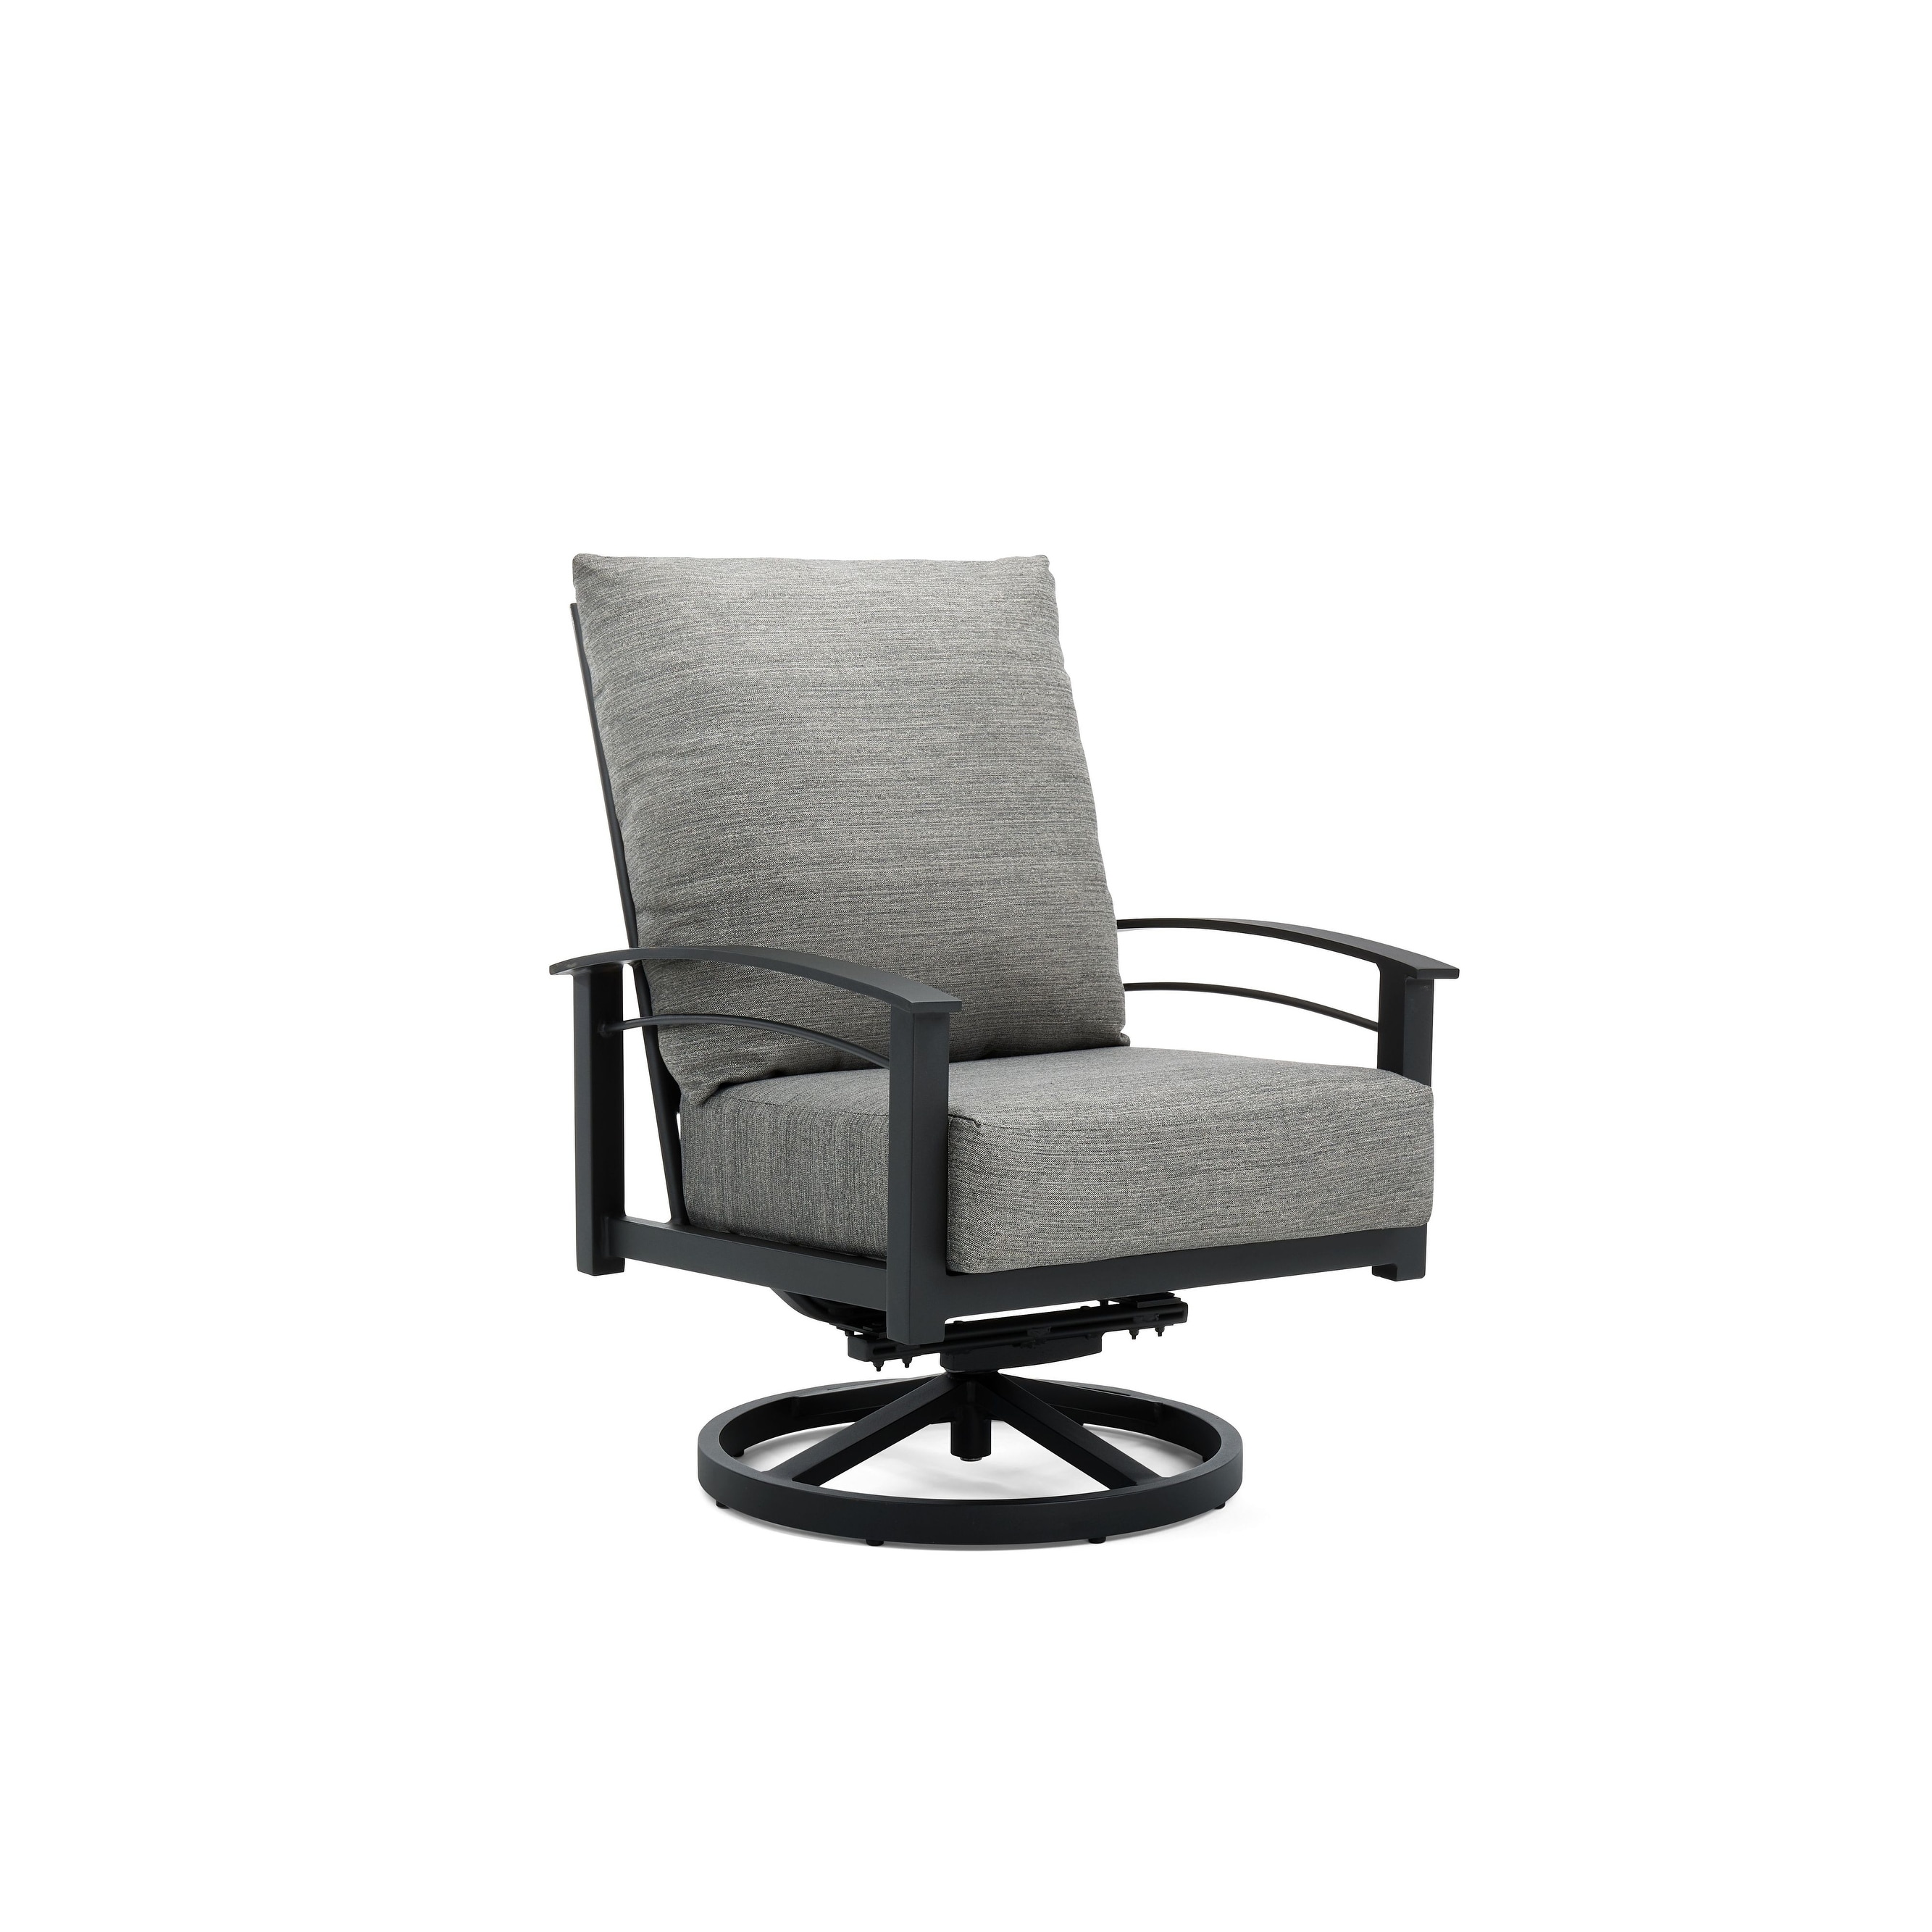 Stanford Cushion High Back Sunbrella Swivel Rocker Lounge Chair